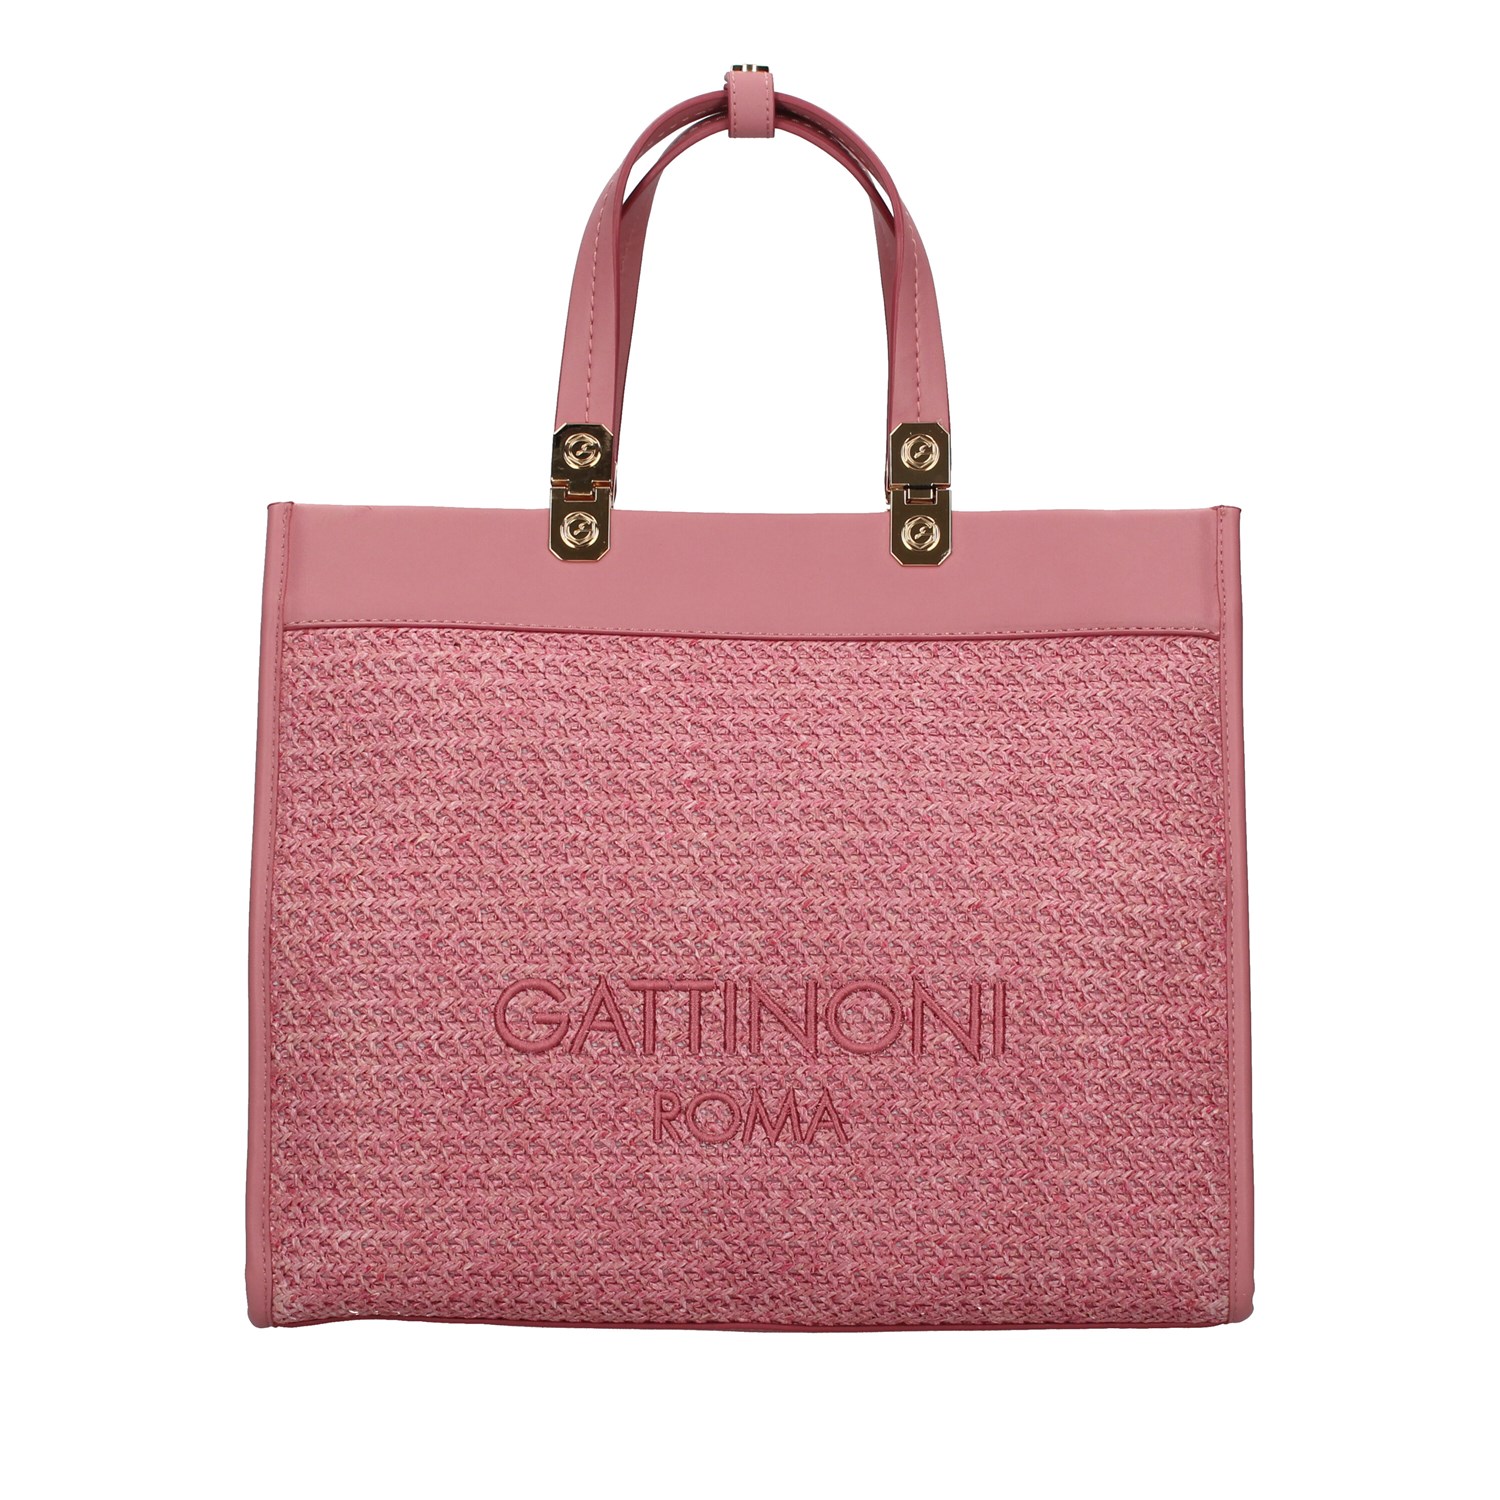 Gattinoni Roma Bags Accessories By hand PINK BINIA7913WZ